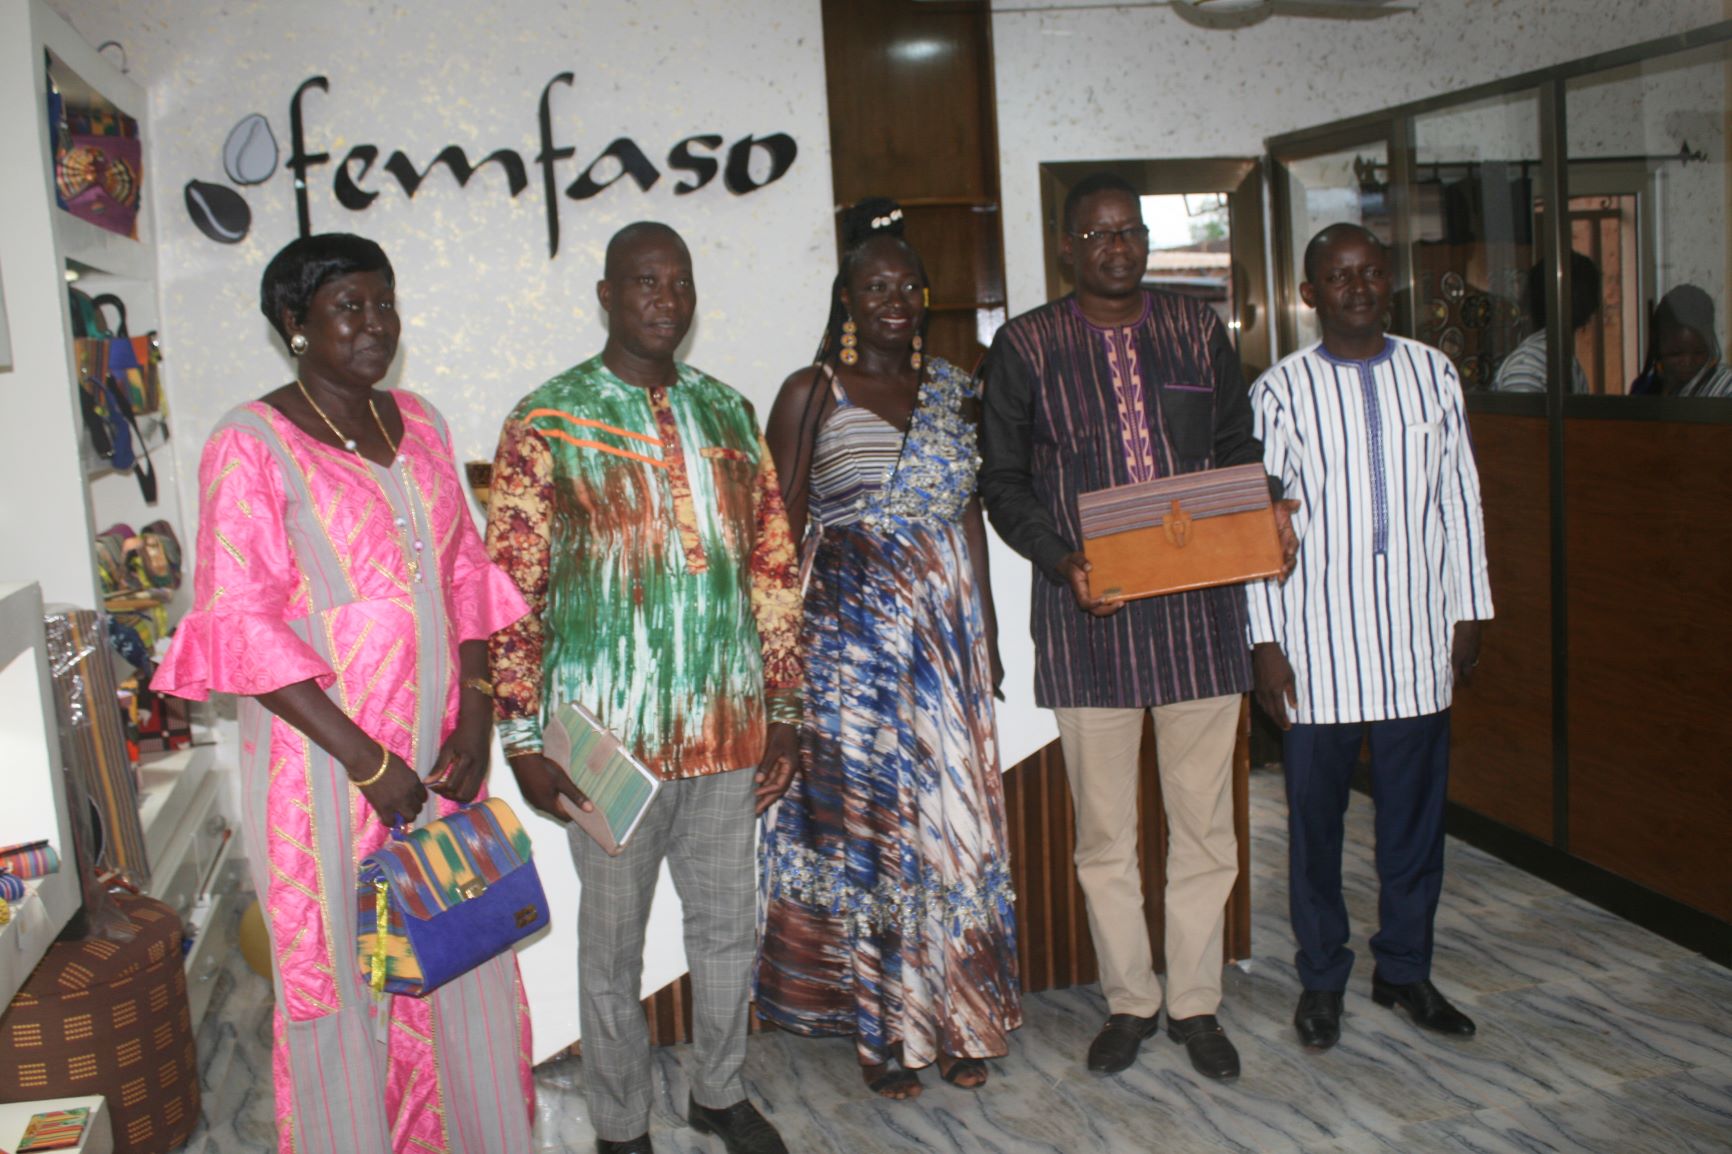  Promotion artisanale au Burkina Faso : FemFaso tient ses 72h d’exposition